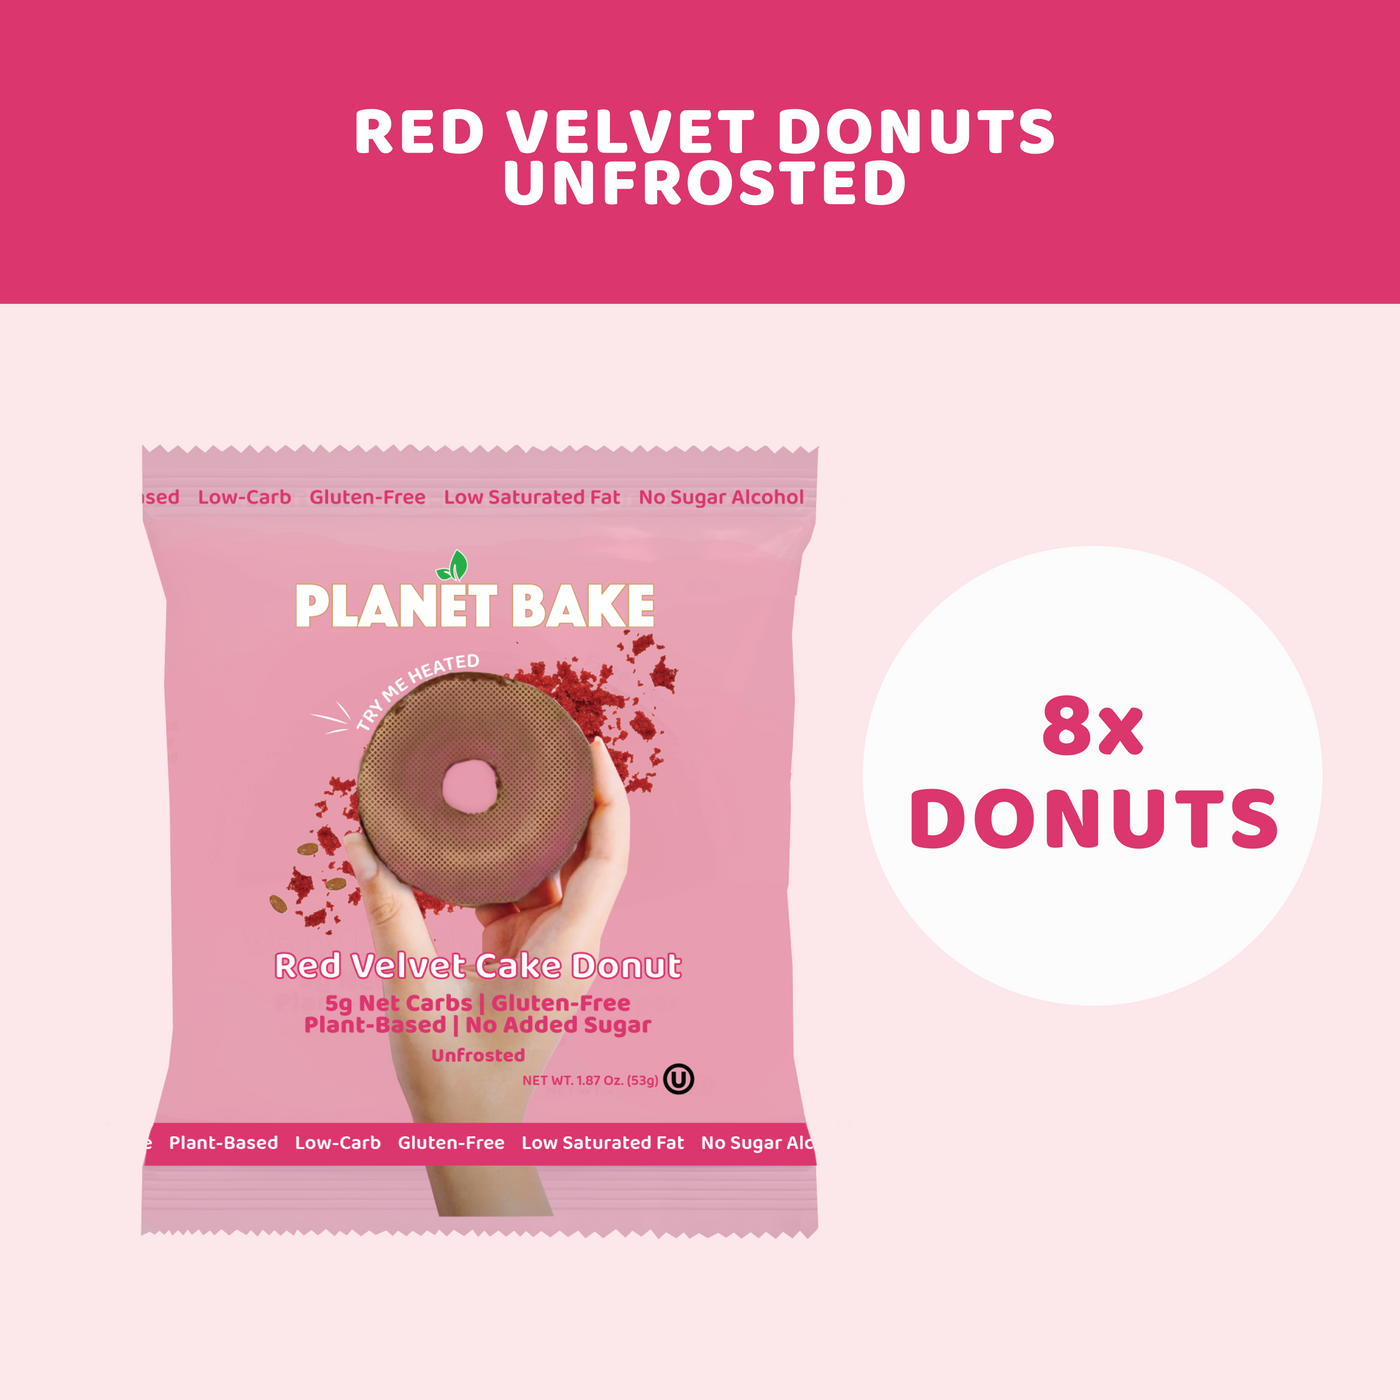 Unfrosted Red Velvet Donuts (8pack)